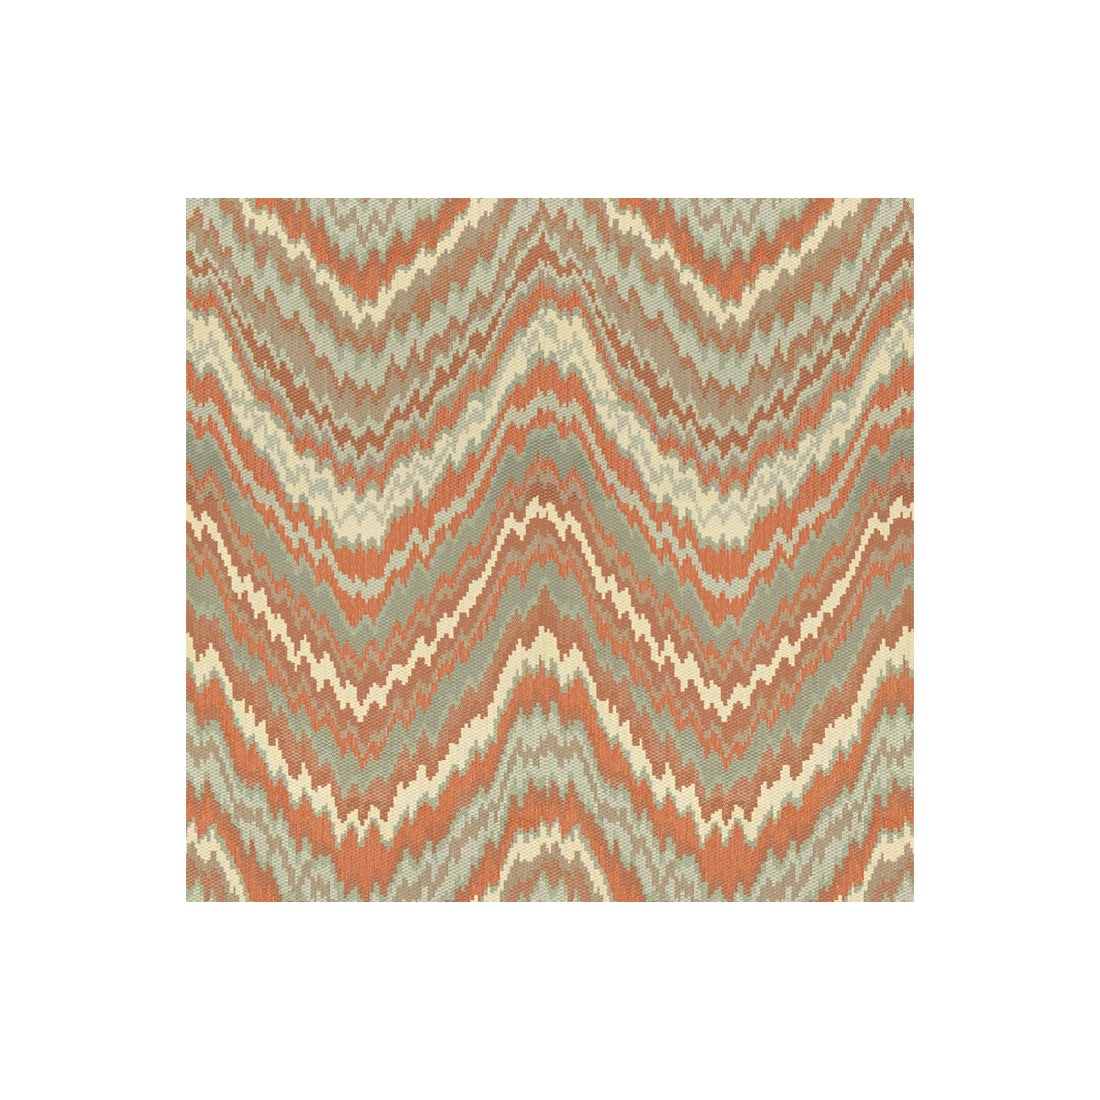 Kravet Design fabric in 33441-1512 color - pattern 33441.1512.0 - by Kravet Design in the Inspirations collection